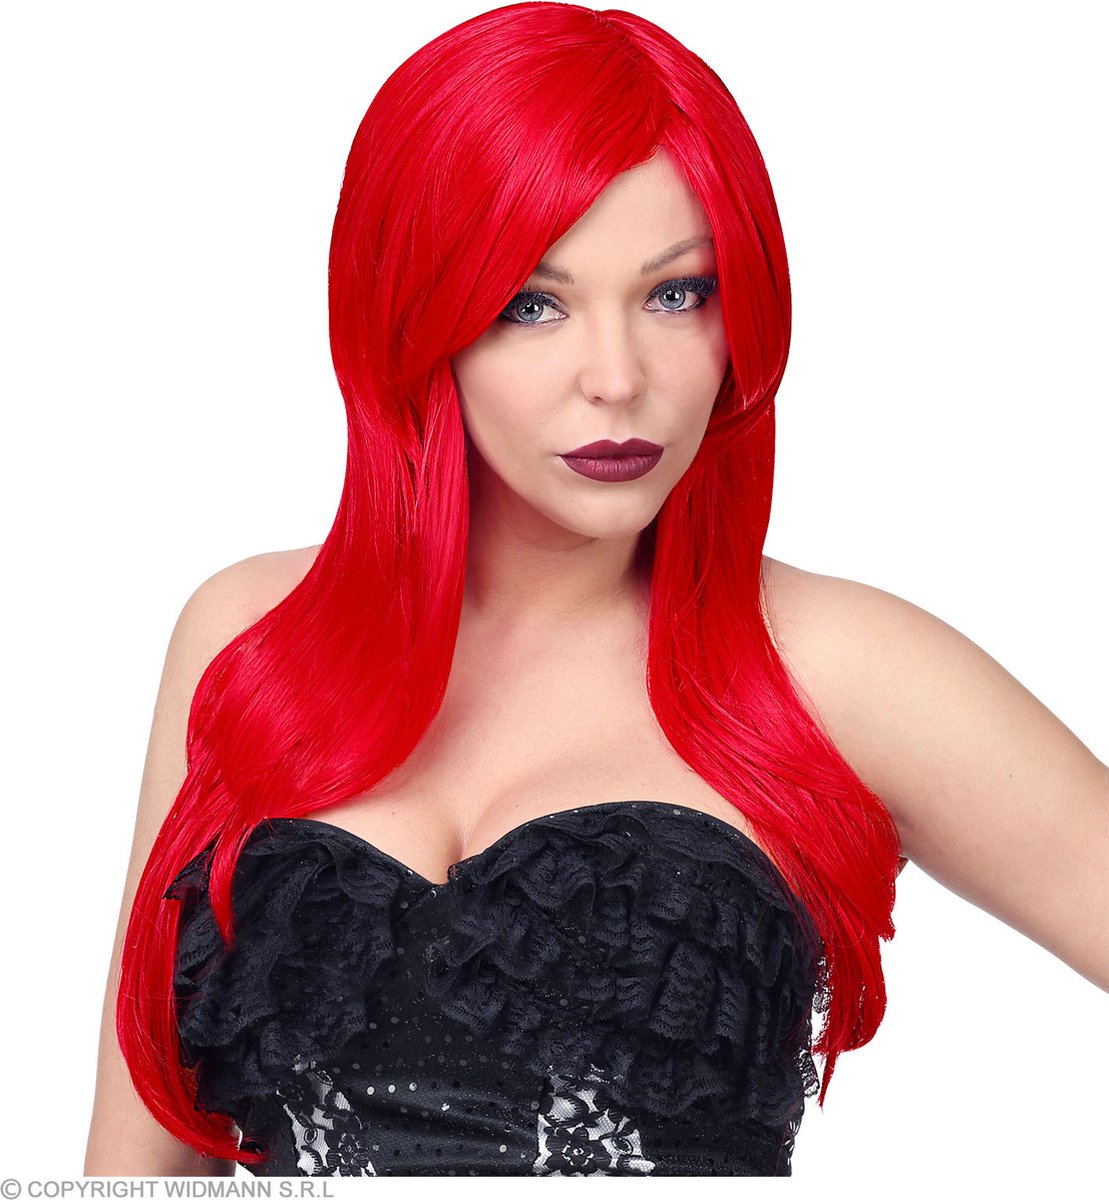 Widmann -Jessica Rabbit Cosplay Pruik Lang Rood Haar - rood - Halloween - Verkleedkleding